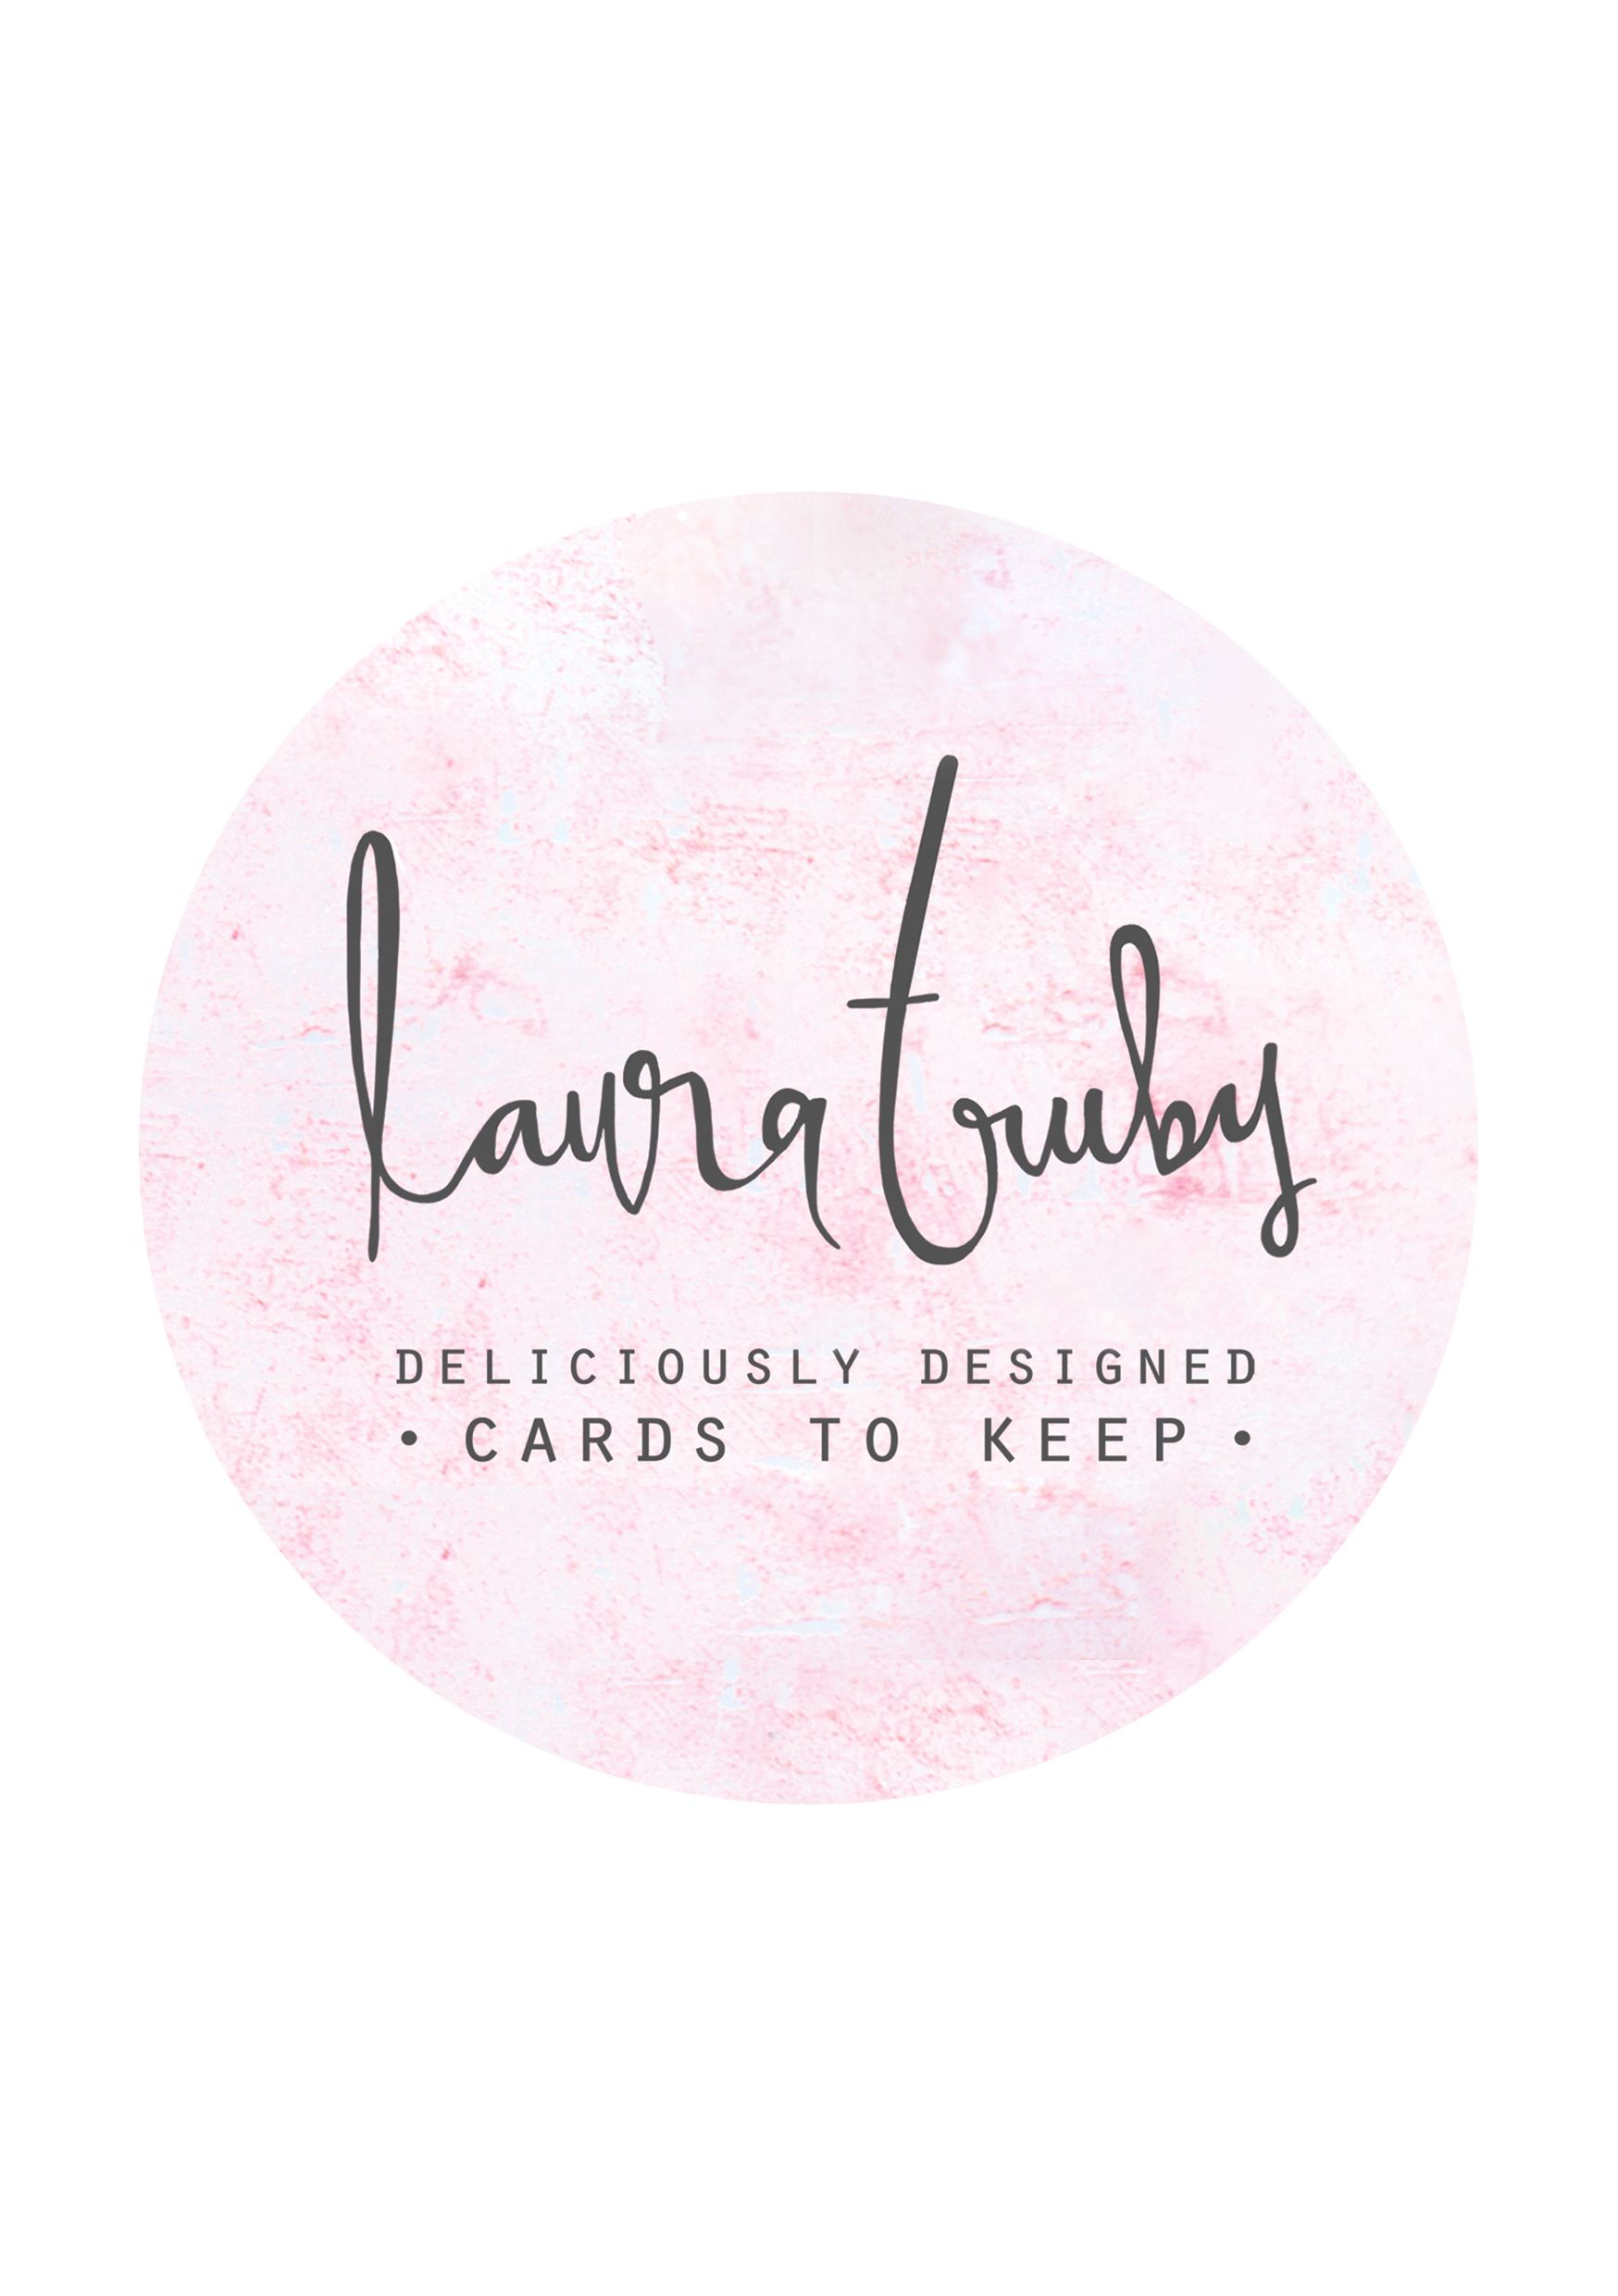 Laura Truby Designs